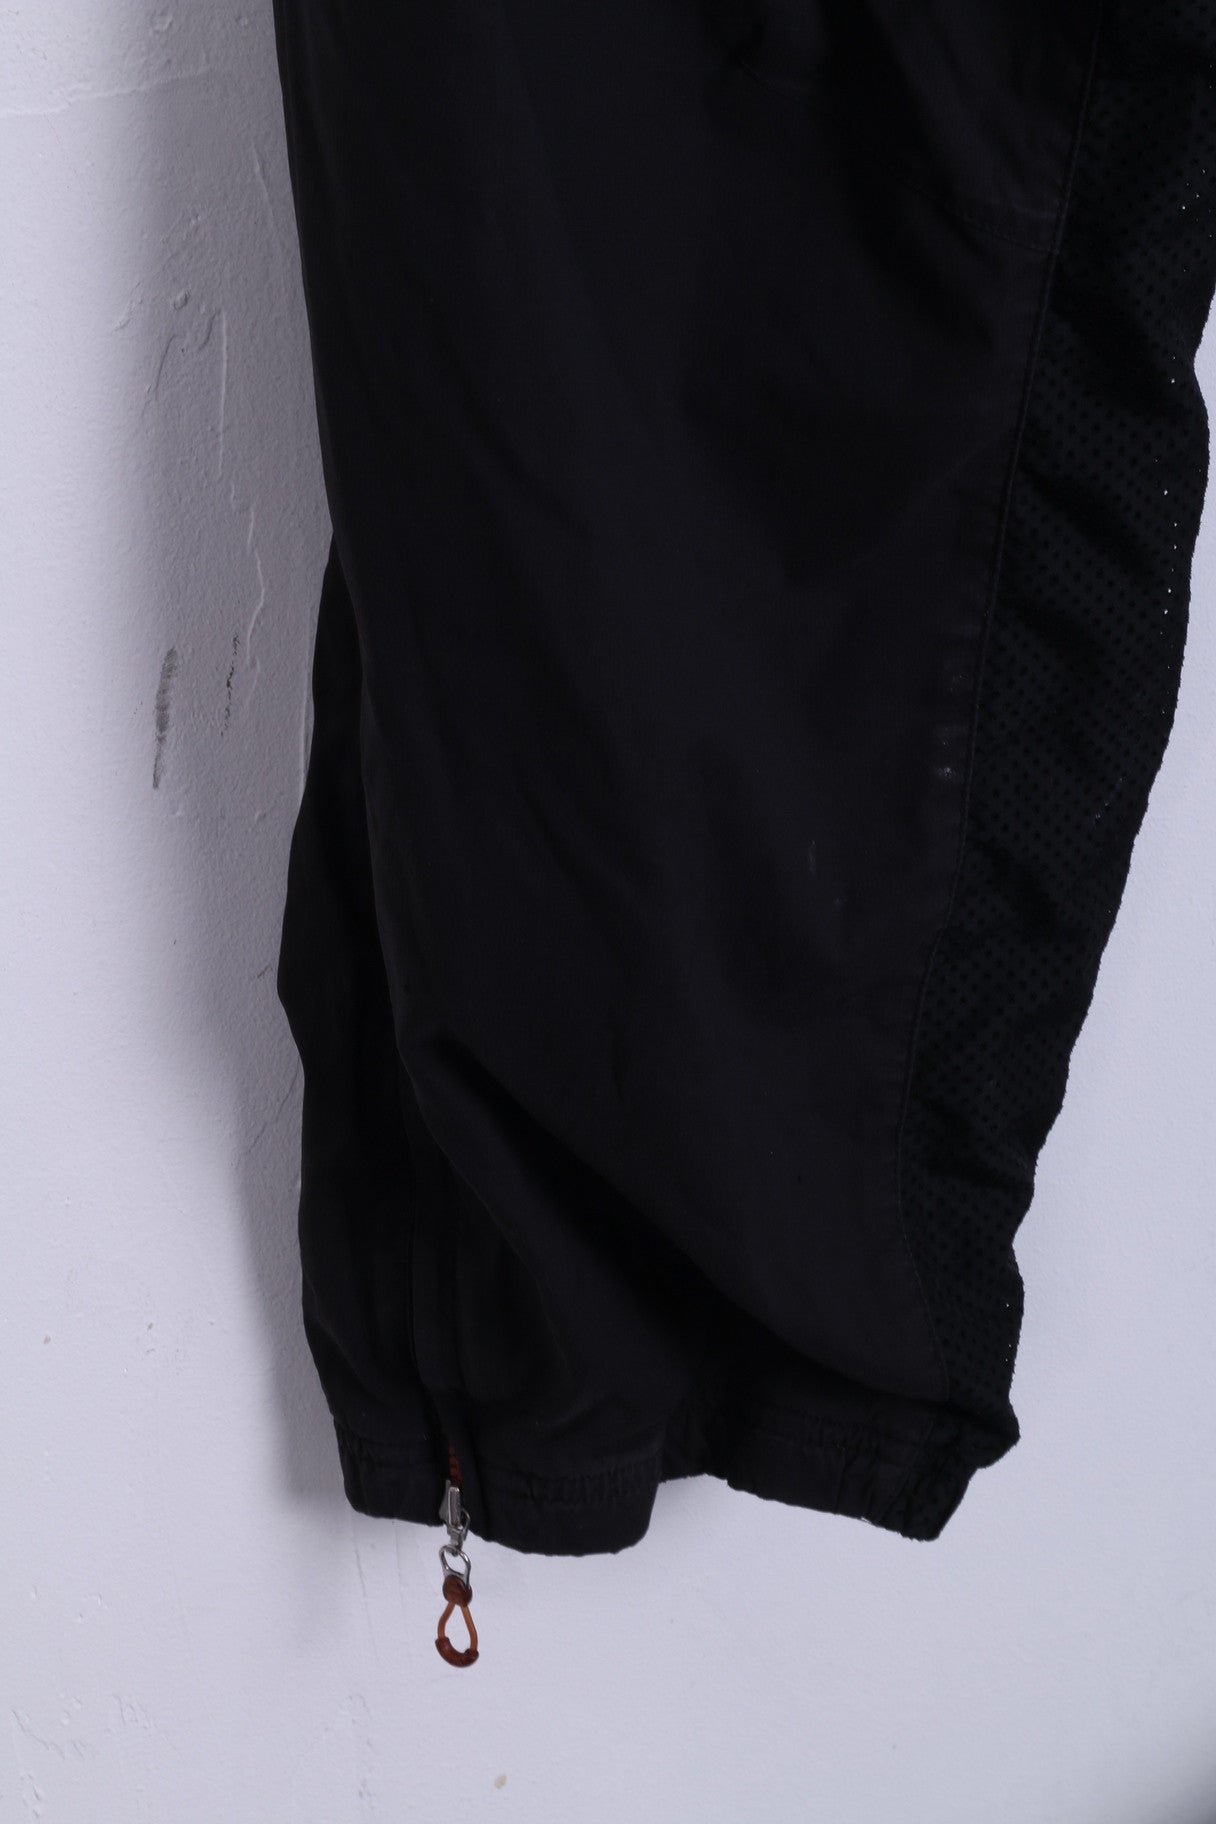 Adidas Mens L Sweatpants Black Trousers training Sport Two Pockets